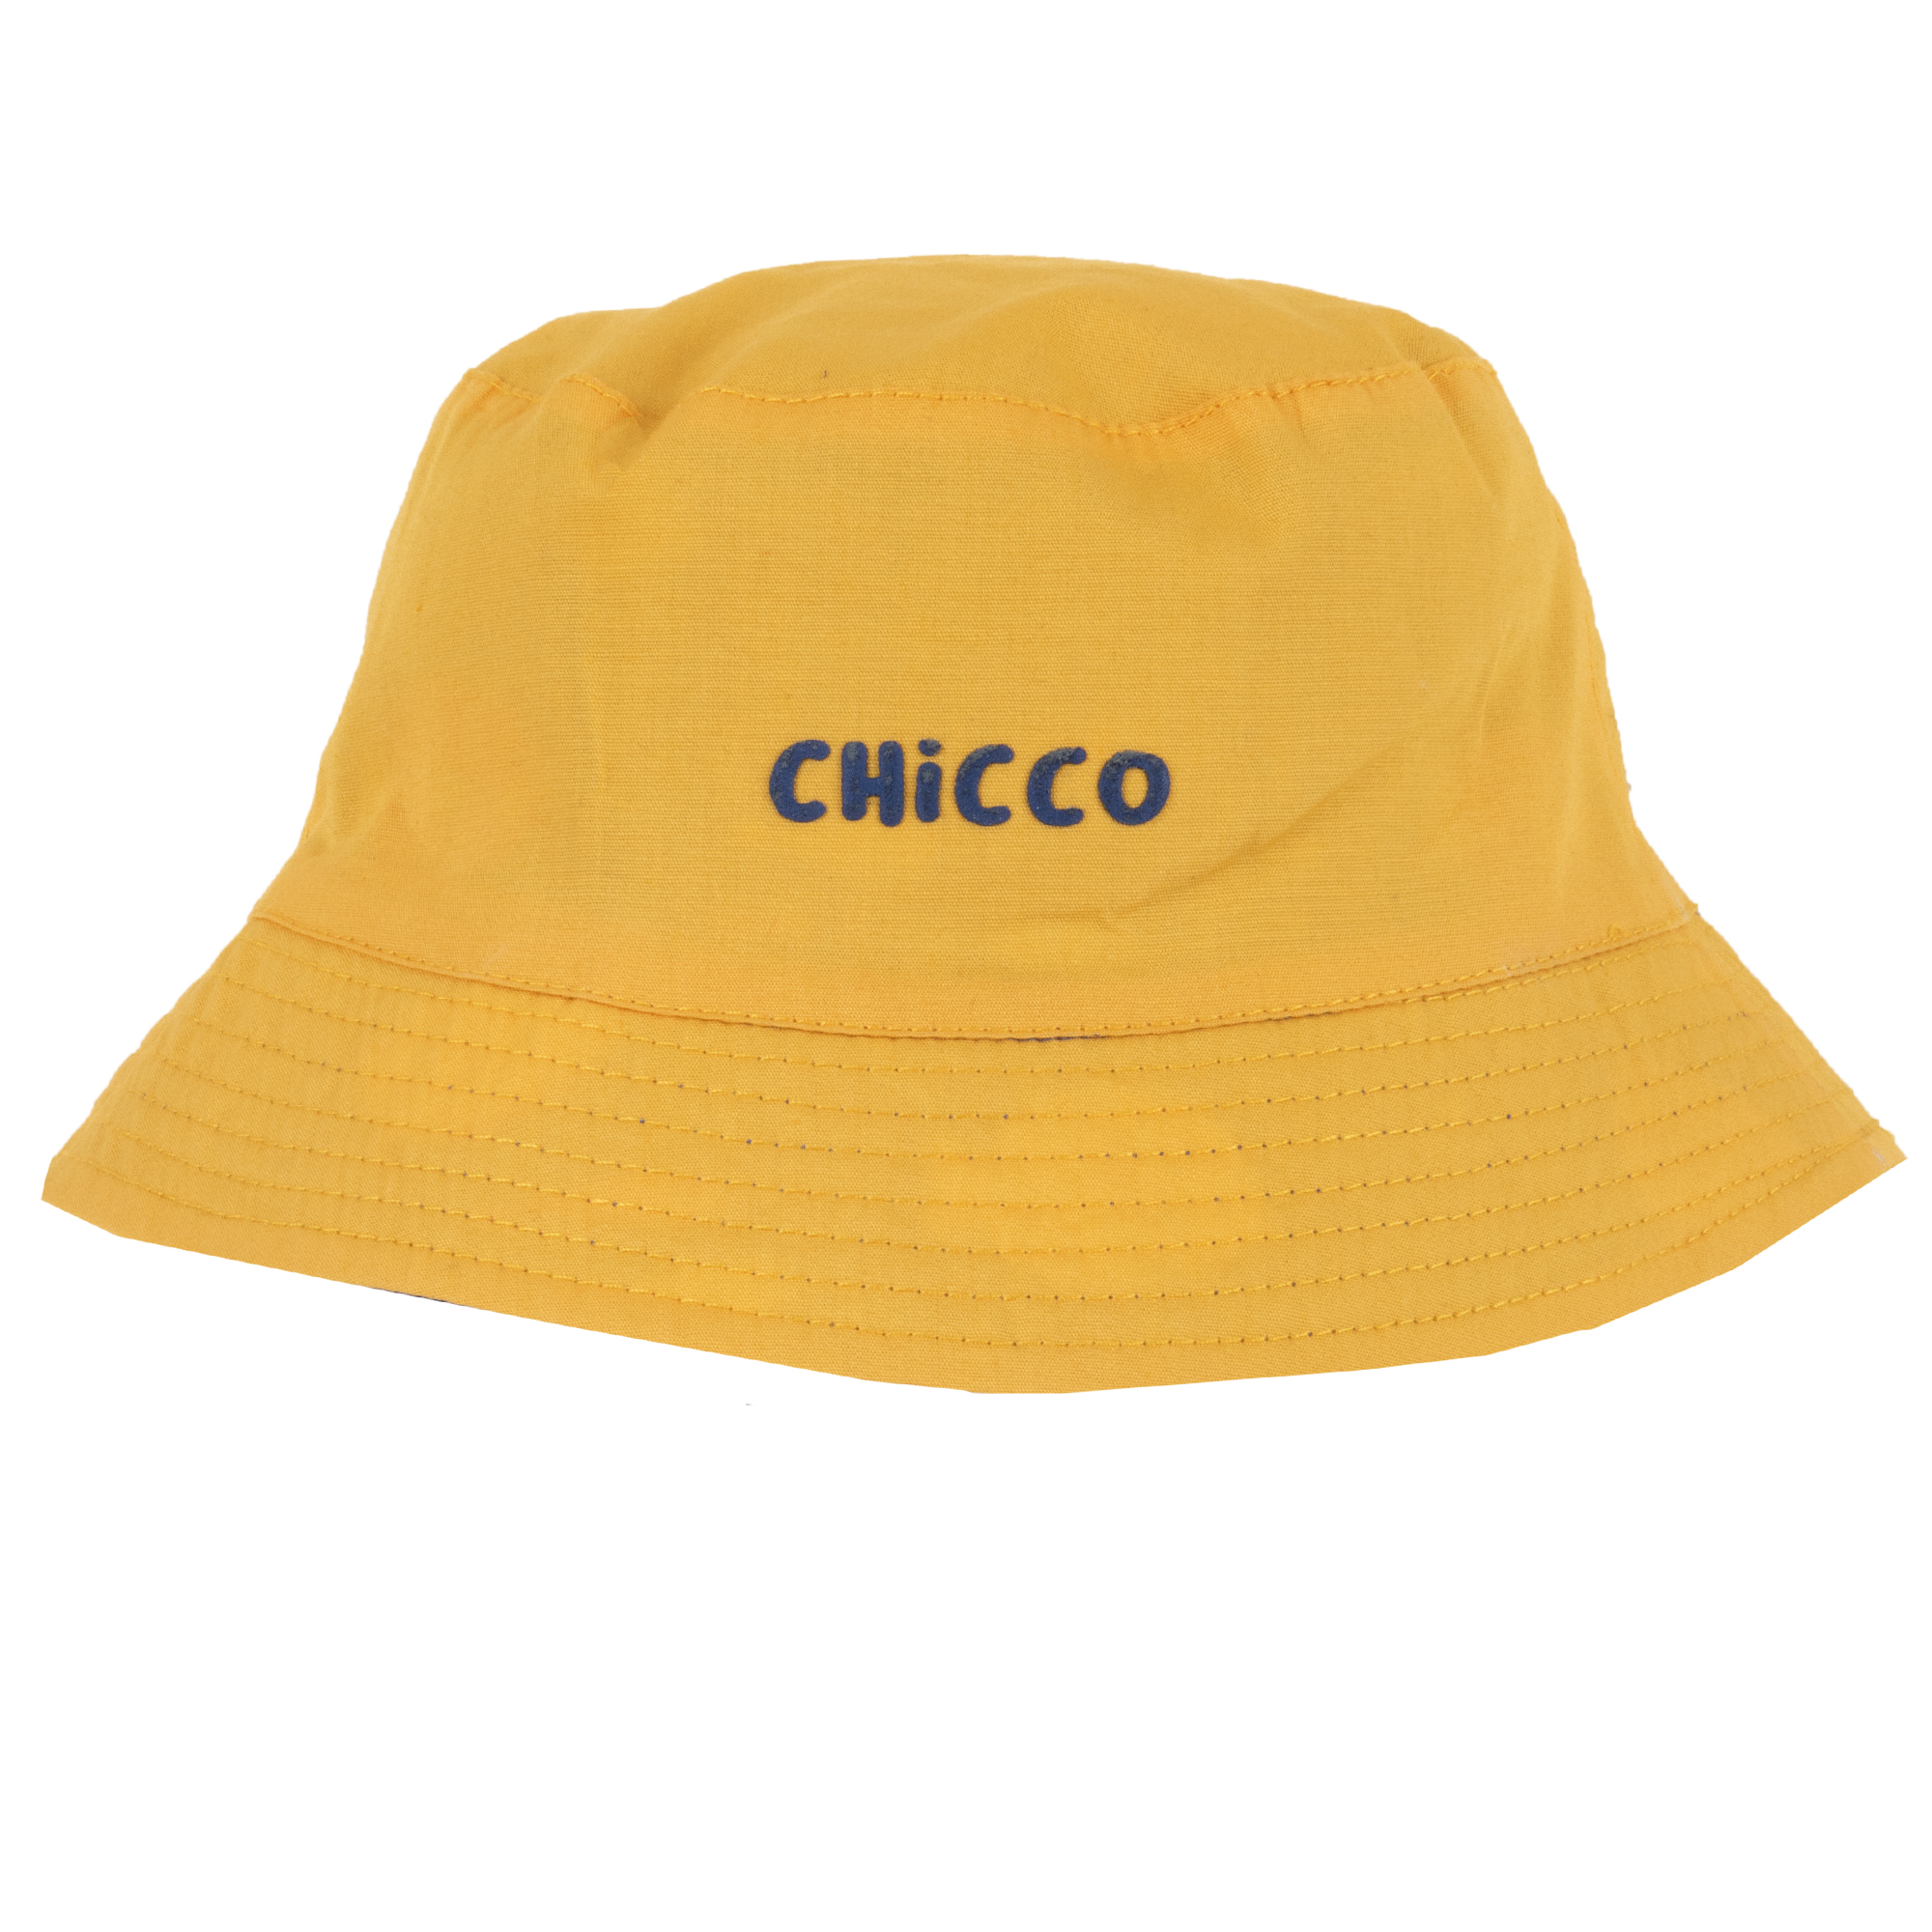 Palarie reversibila copii Chicco, galben, 88443-62MFCO CHICCO